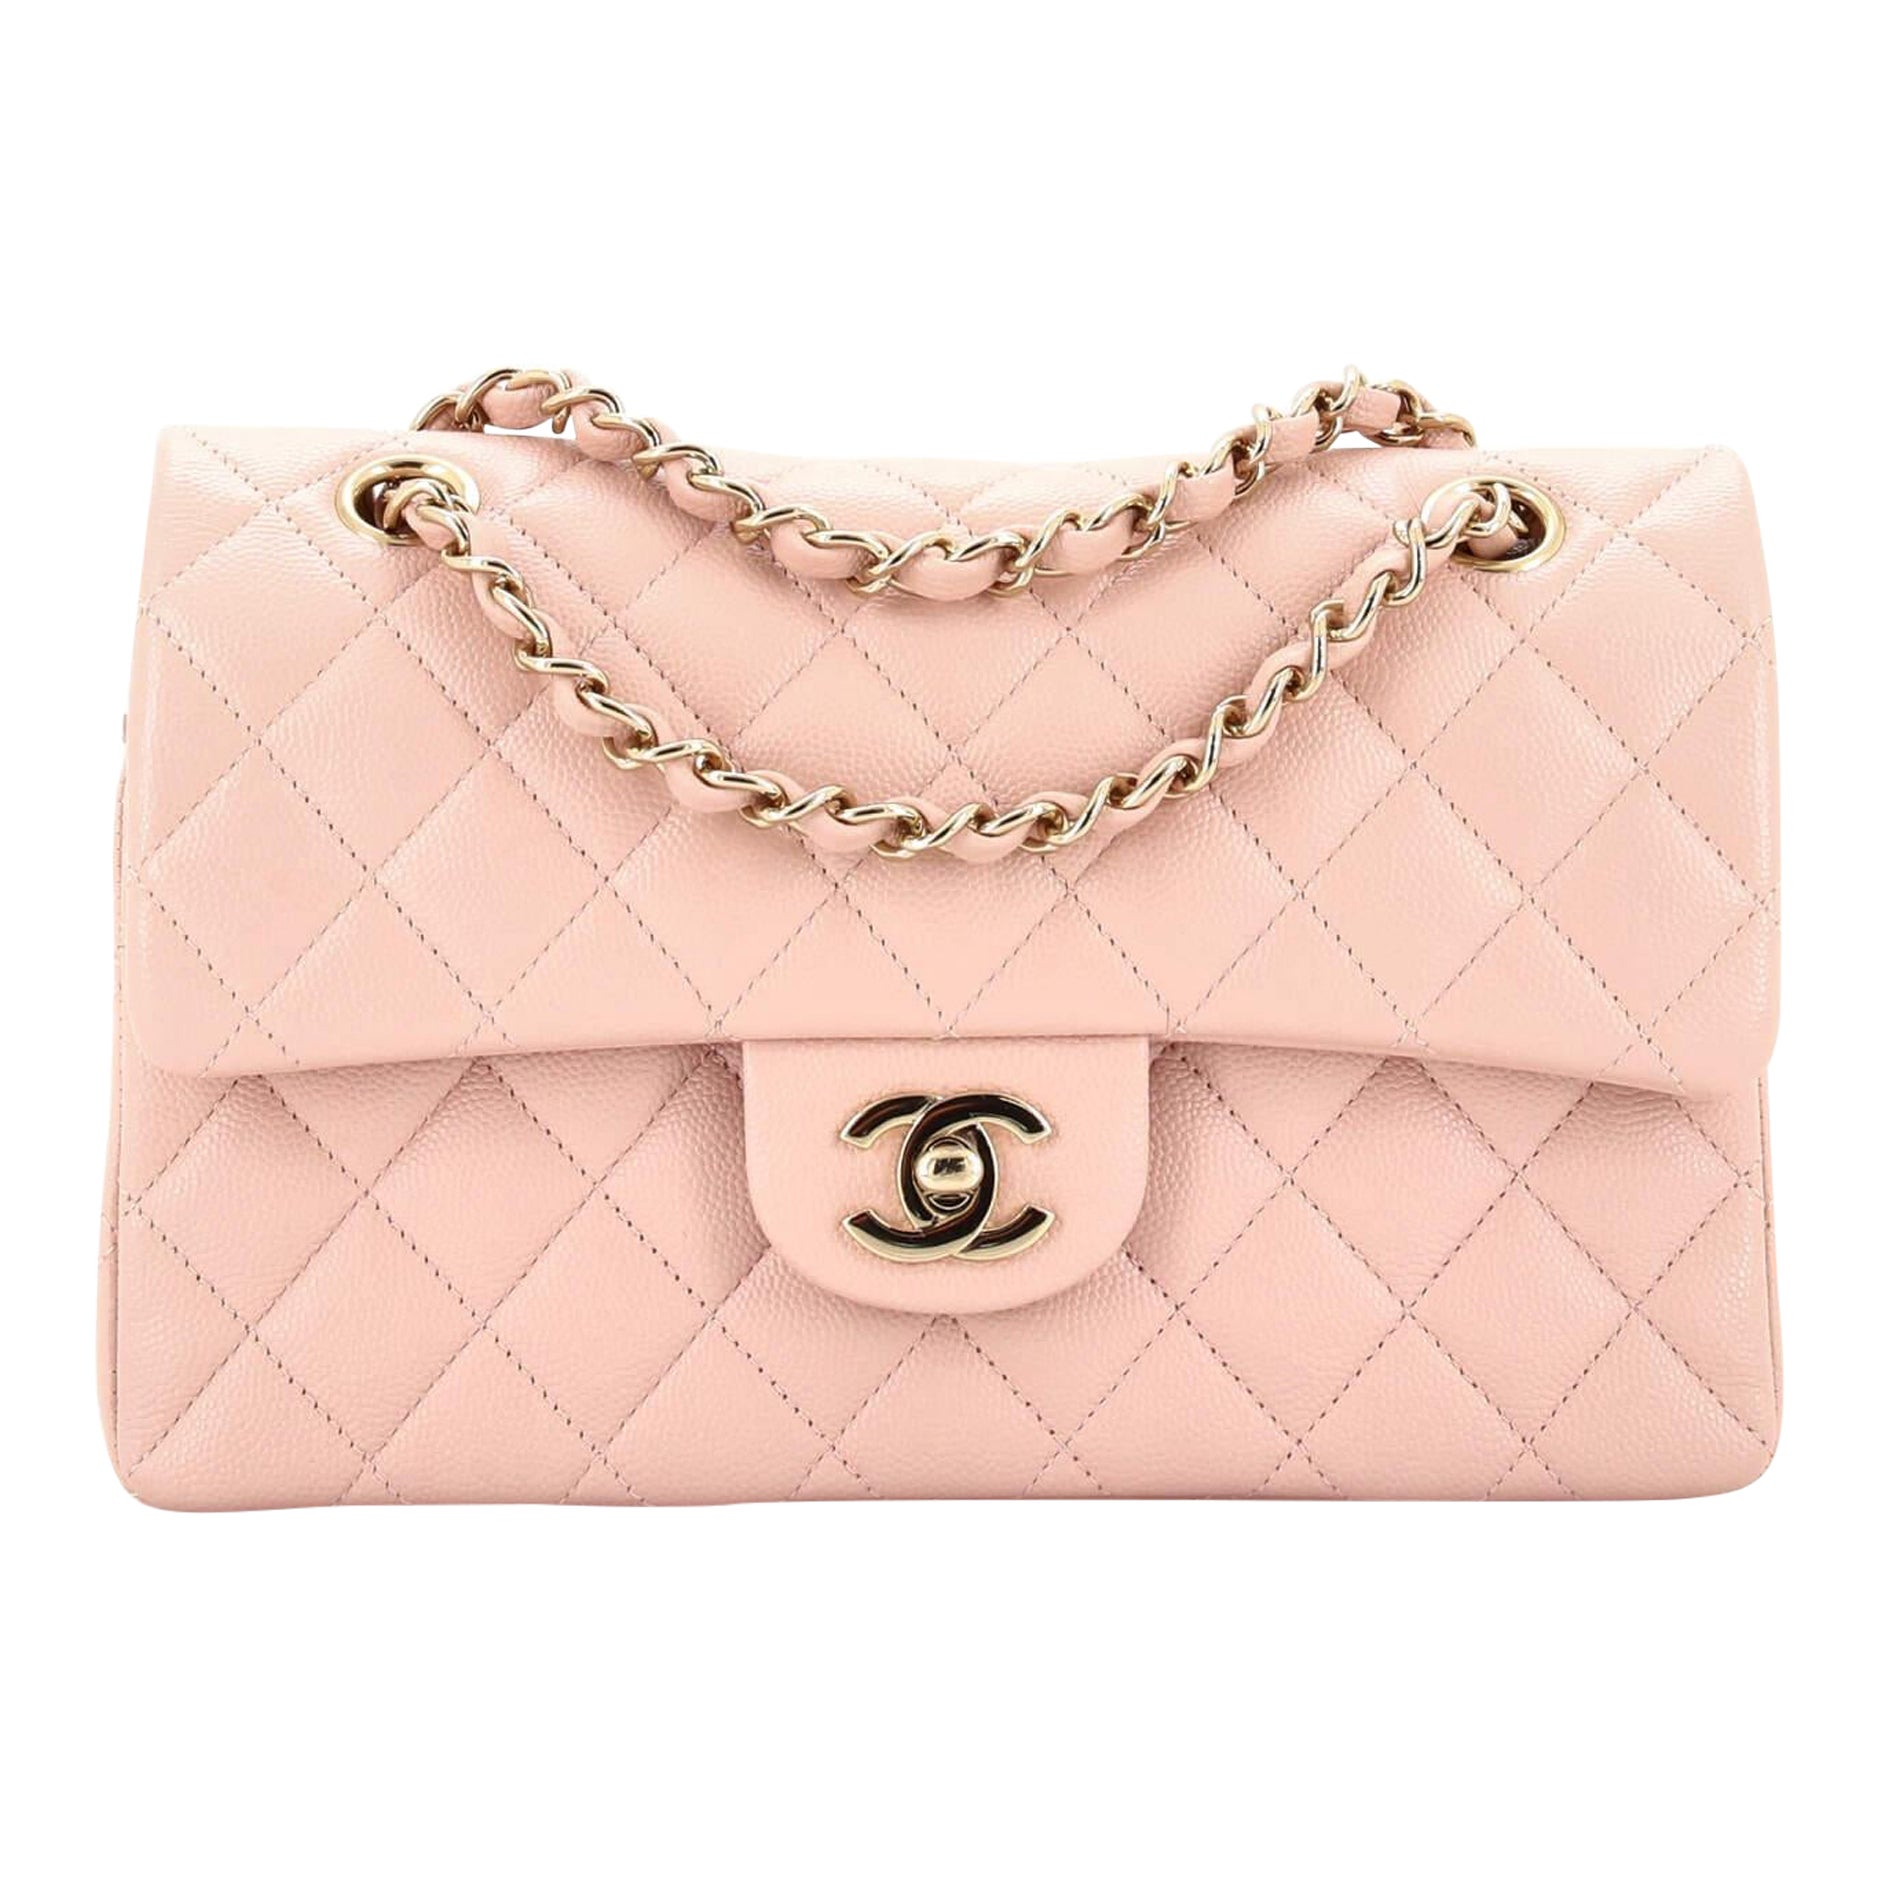 Chanel Dallas Boy Bag - 3 For Sale on 1stDibs